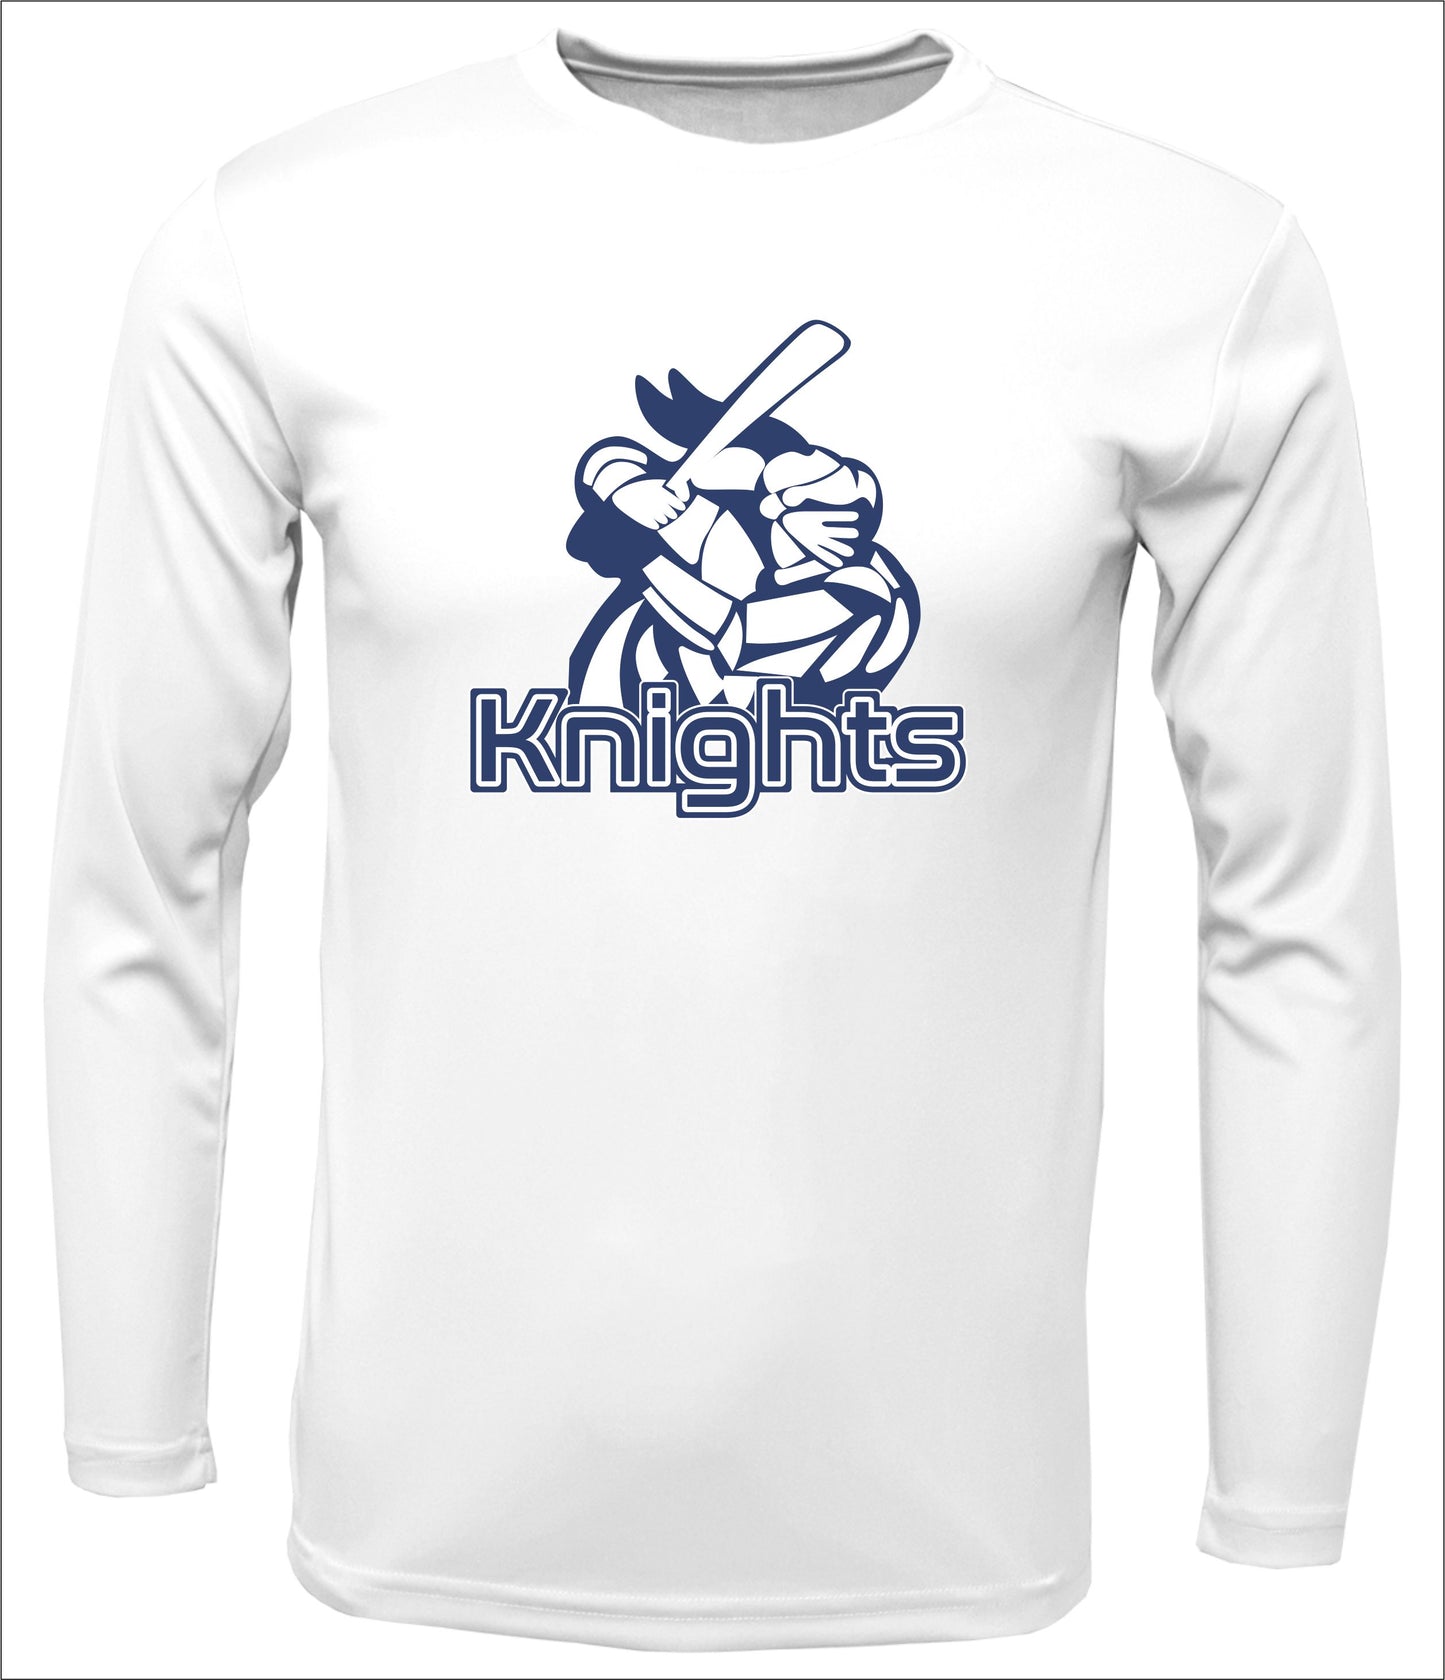 Knight Long Sleeve Dri-Fit T-shirt